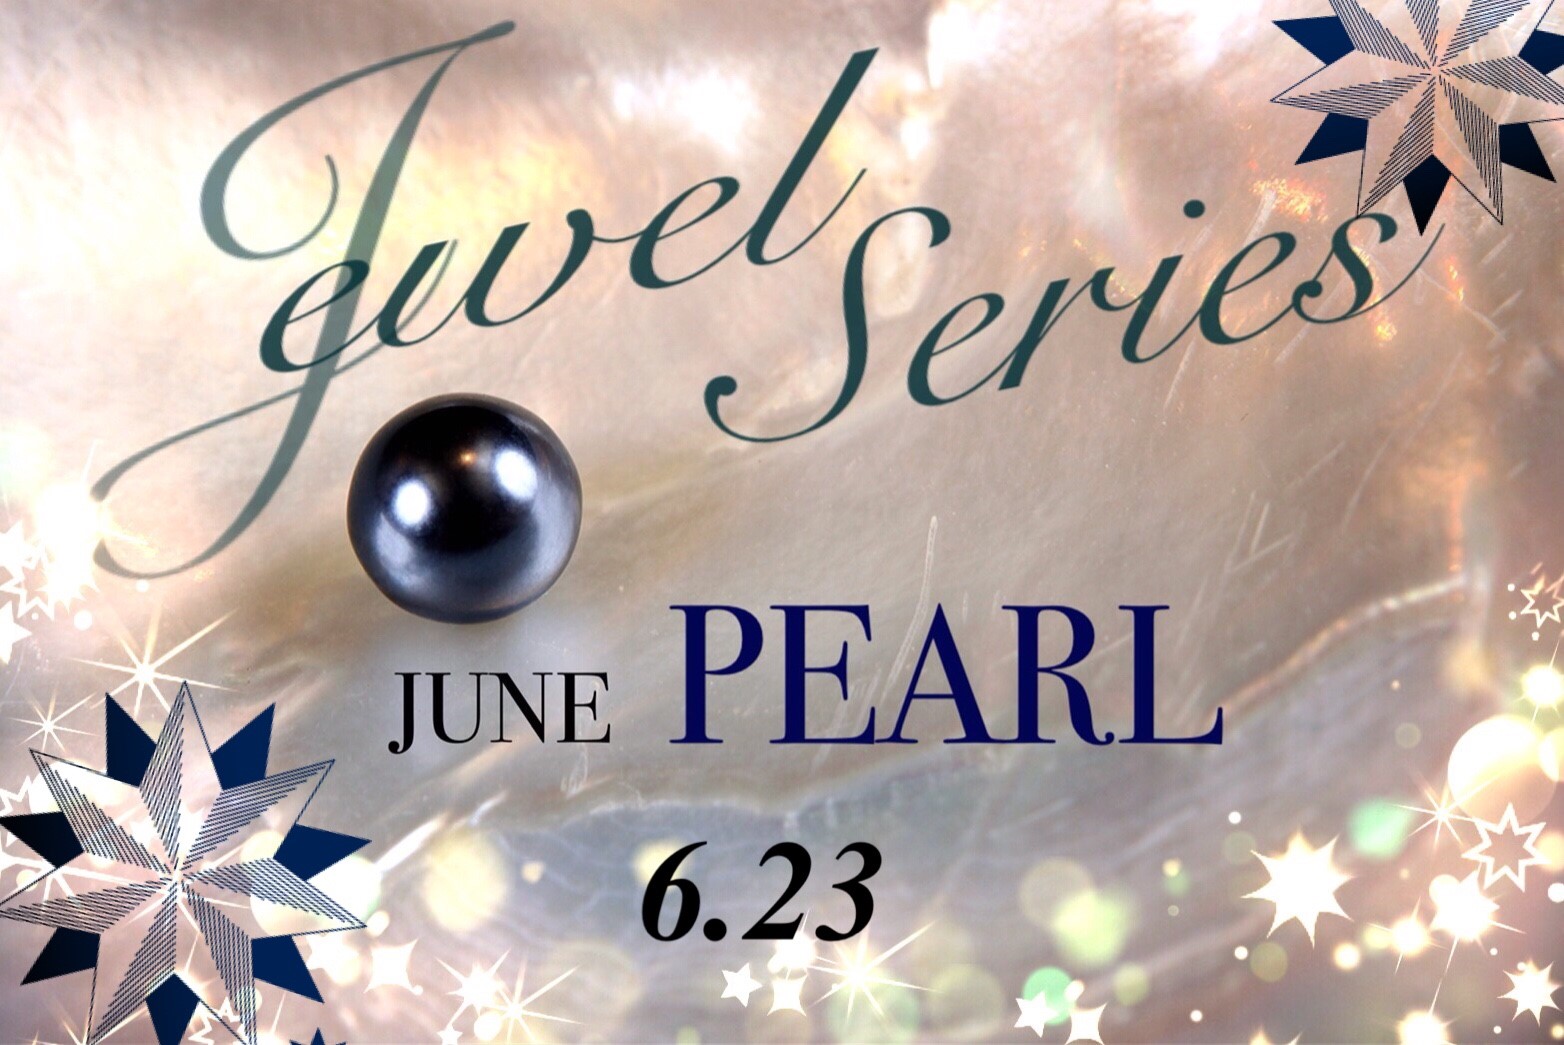 2018/6/23 JEWEL SERIES PRIZE MATCH JUNE PEARL